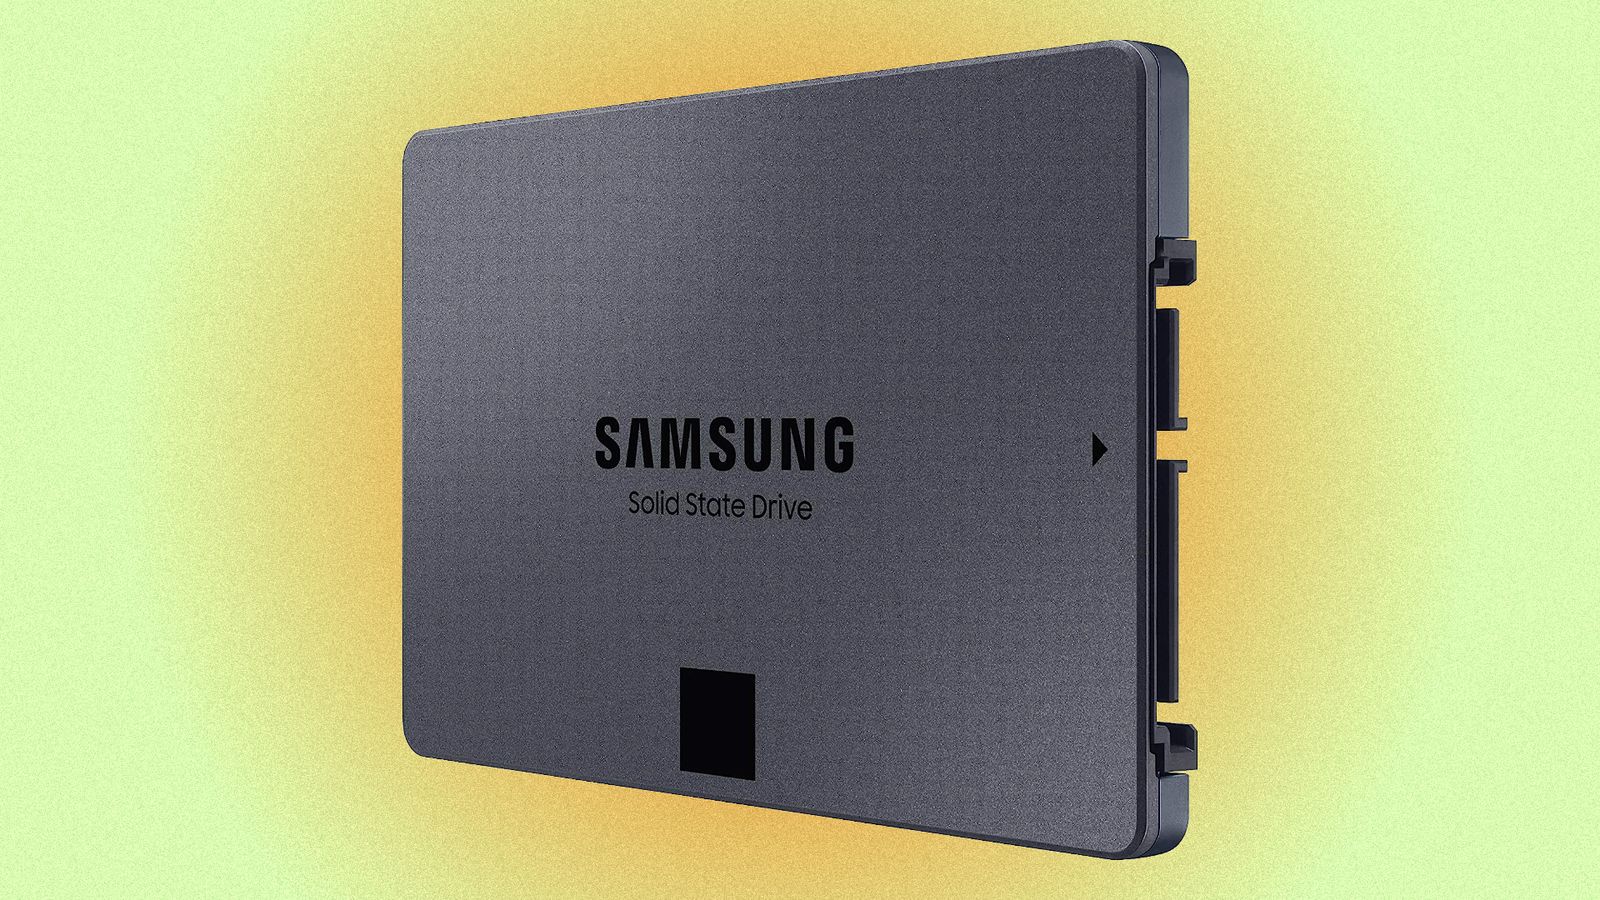 A Samsung 870 QVO SATA SSD against a green and orange background.